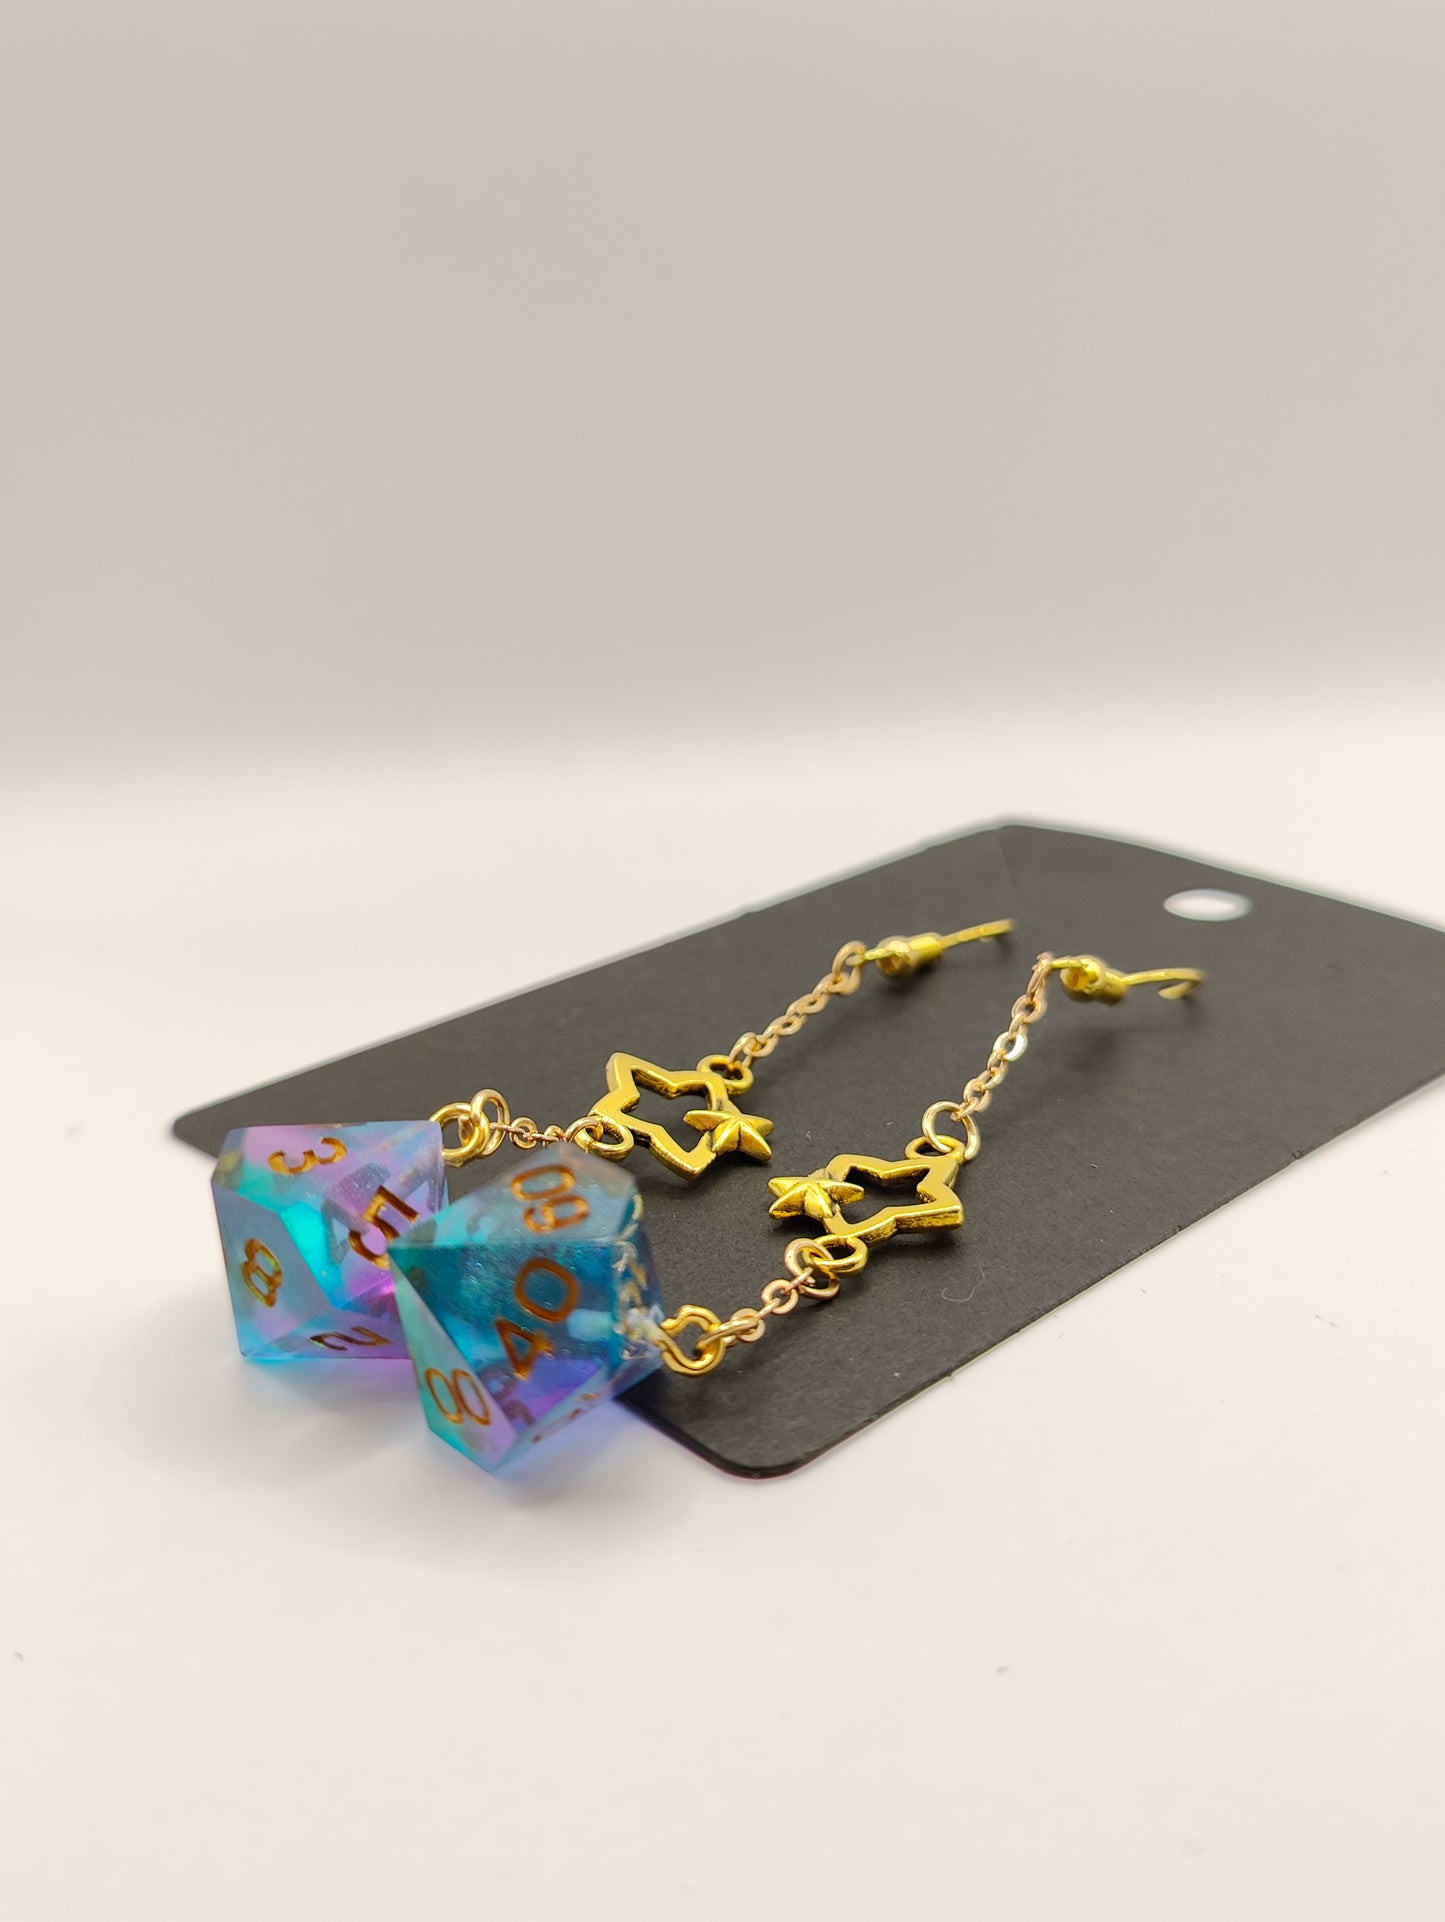 Handmade dangly mini D10/D% earrings: Sunken treasure